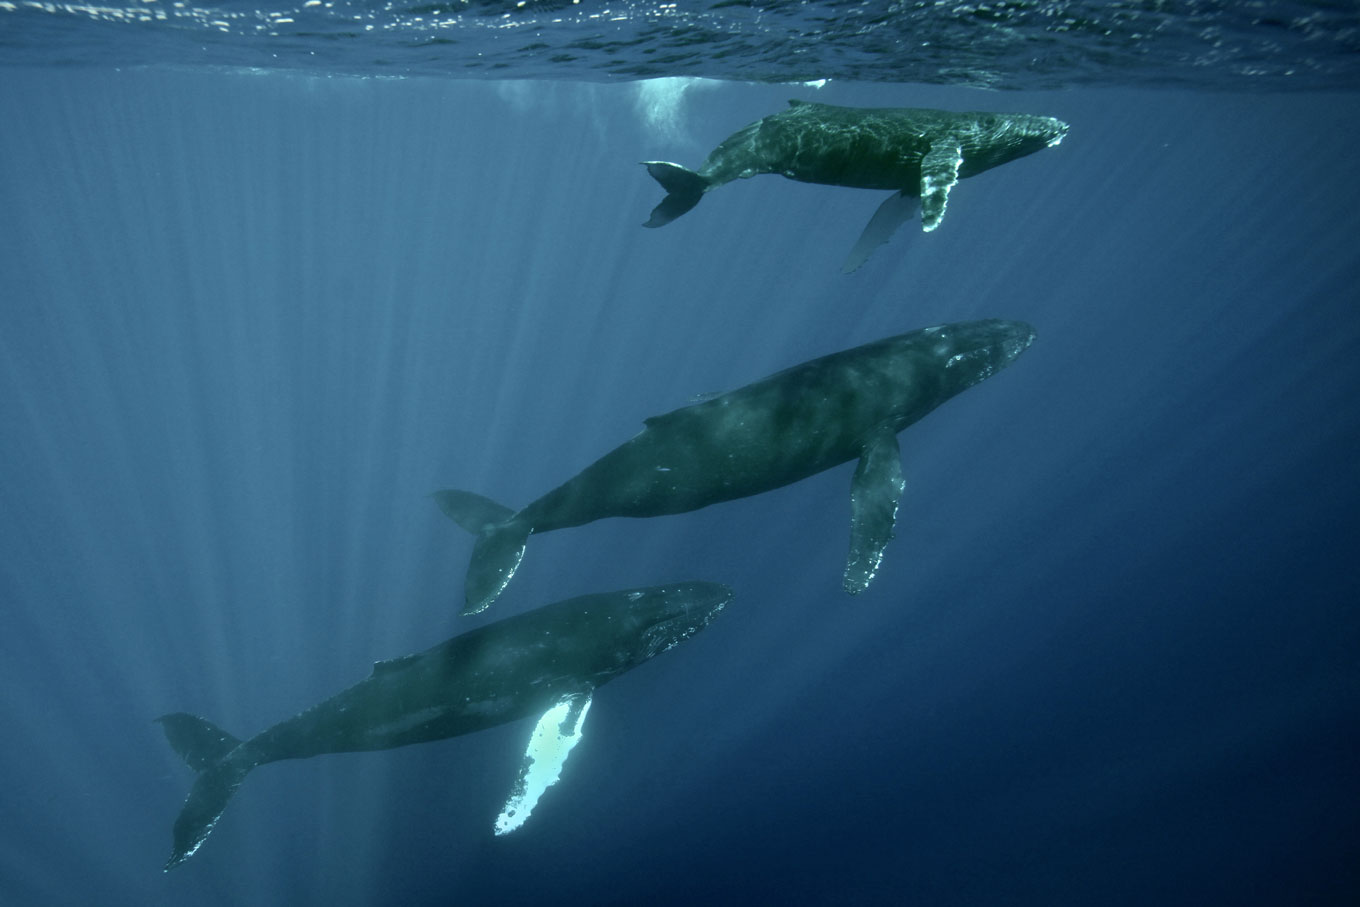 Three humpback whales swim together underwater